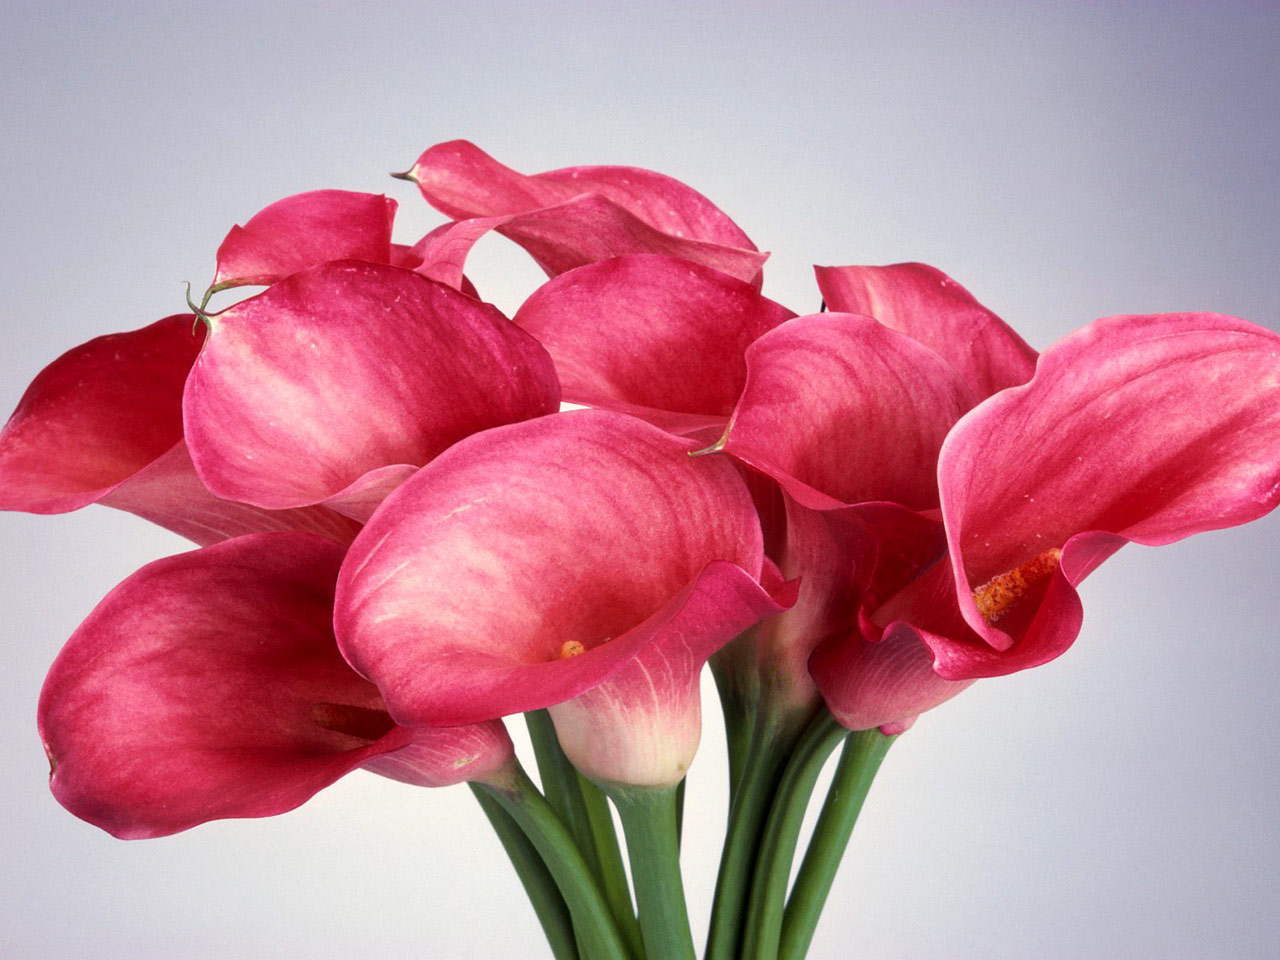 http://3.bp.blogspot.com/-REWG6m9N6rw/TePe9AWDv7I/AAAAAAAAACw/uySbDLOF240/s1600/Pink+Calla+Lilies-flowers-wallpapers.jpg